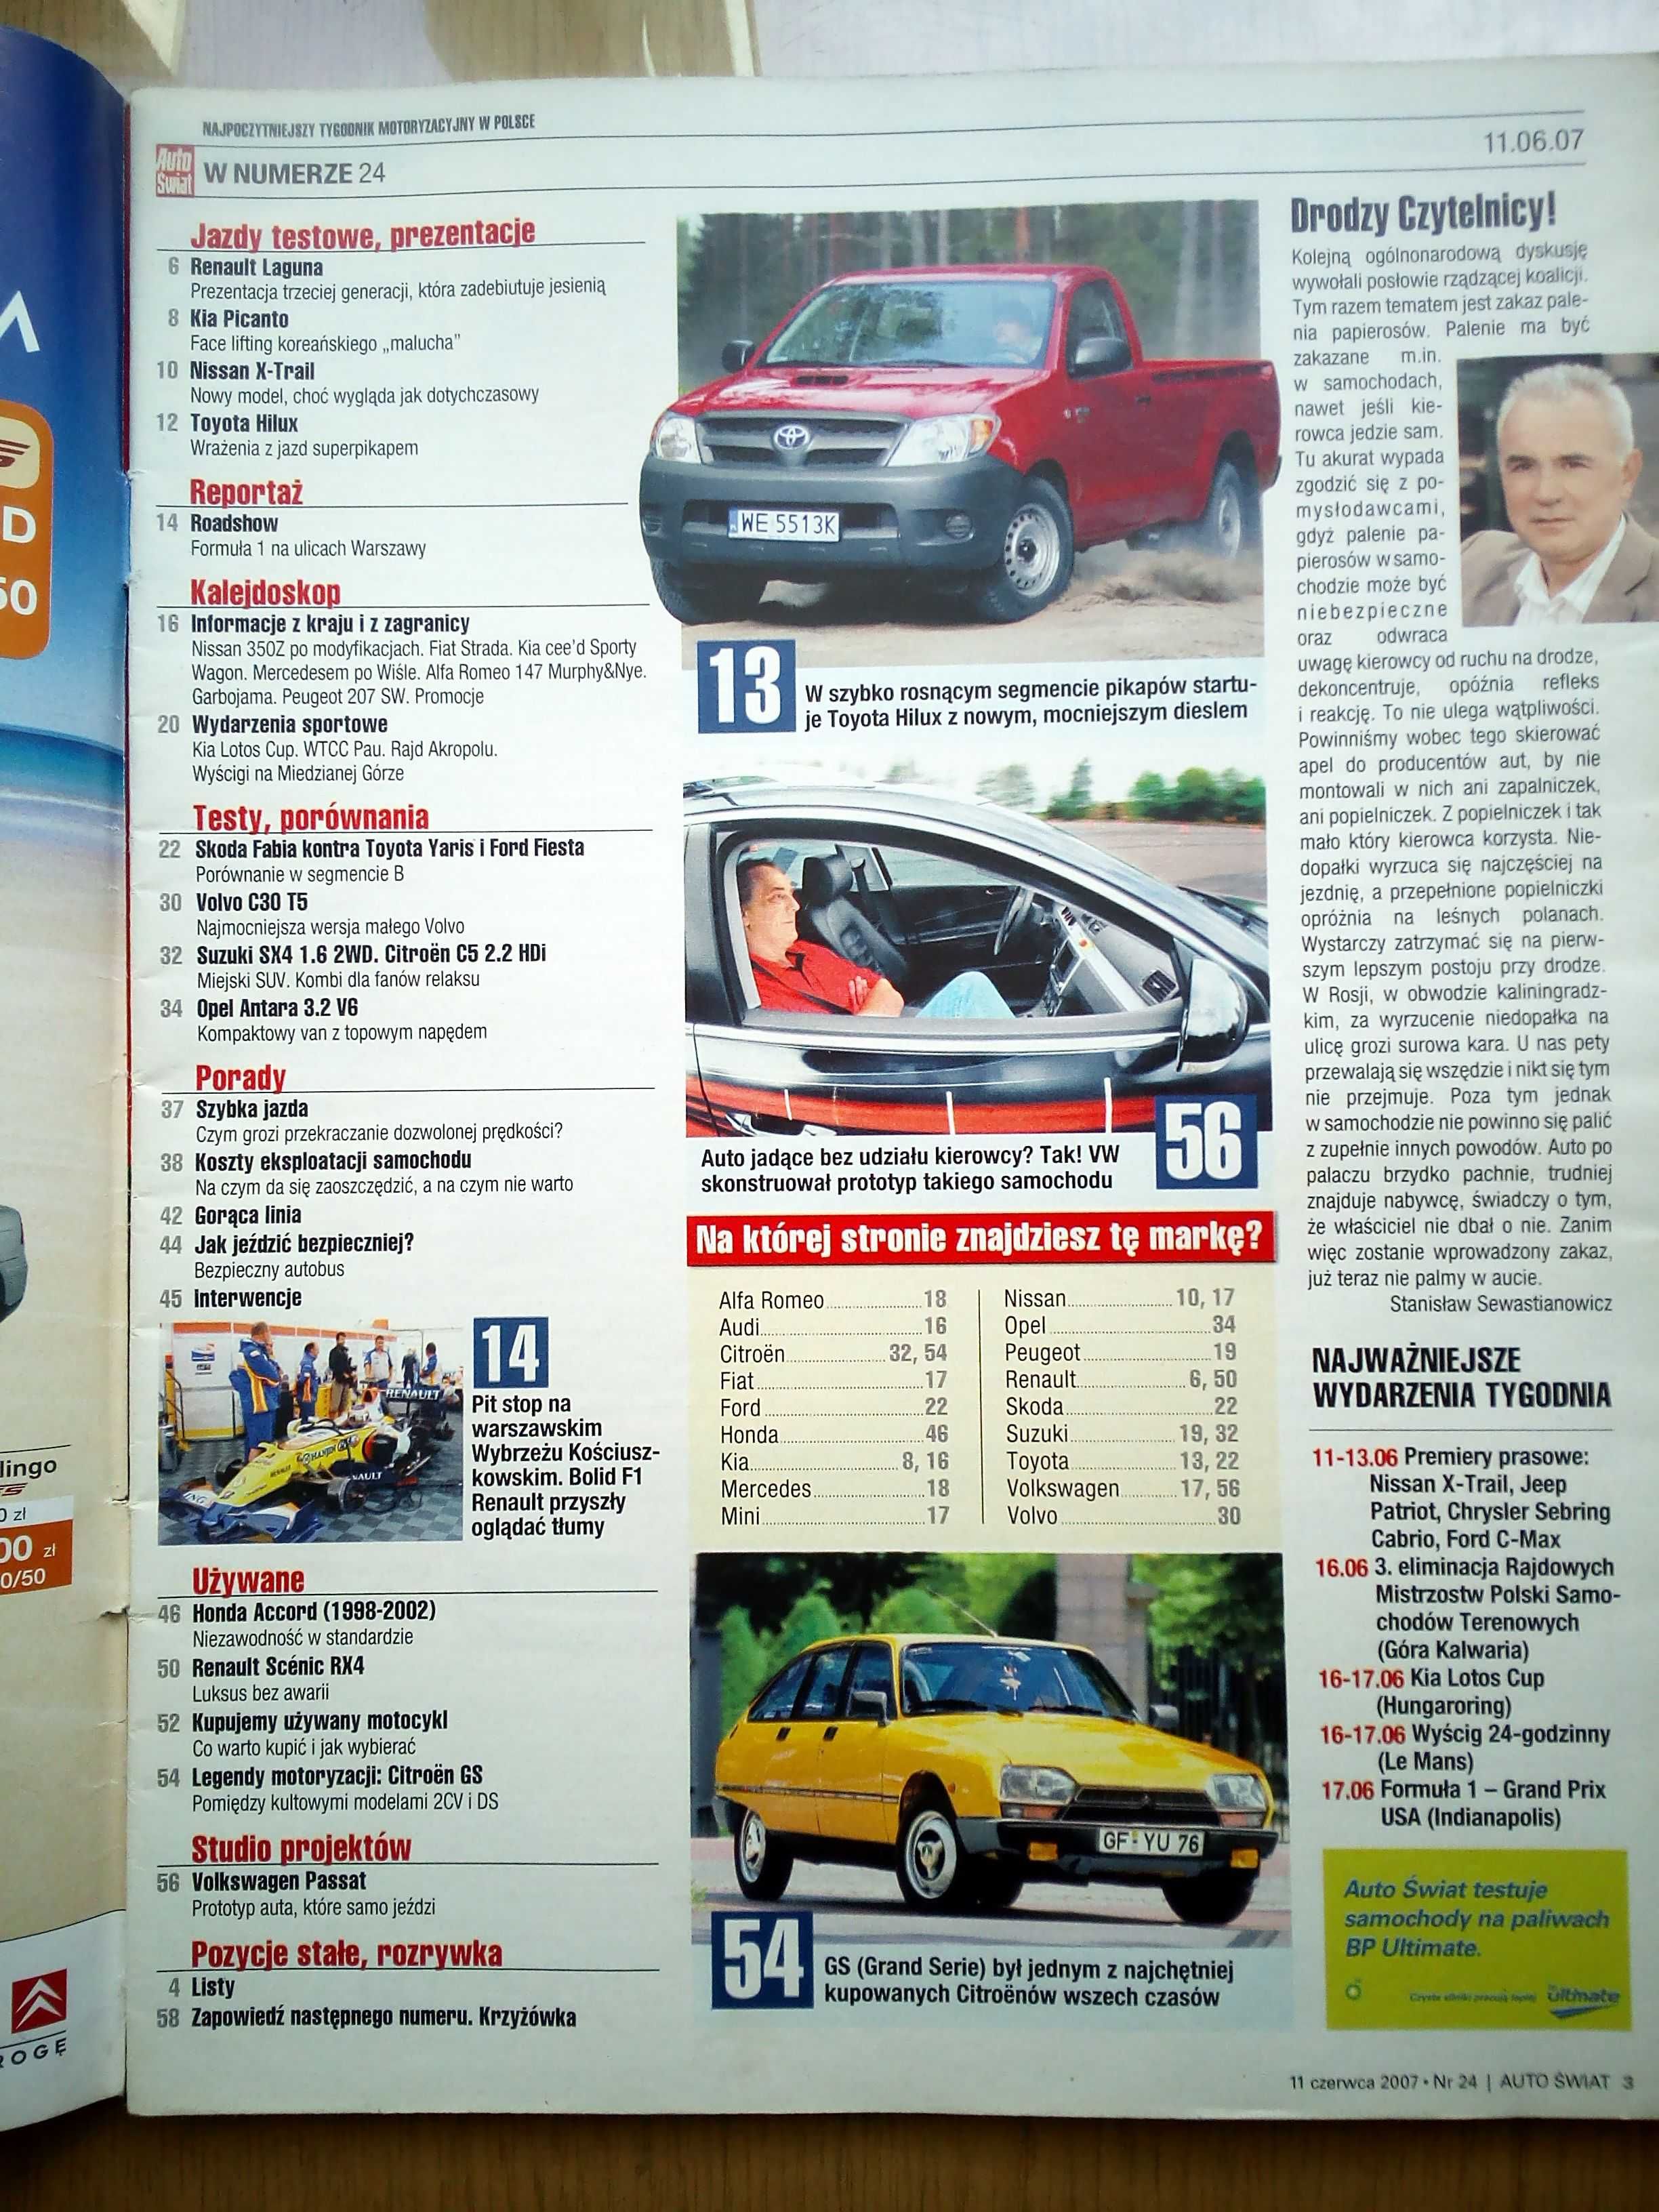 Citroen GSA , Renault Scenic RX4 , Accord ,Nissan X-Trail ,Opel Antara